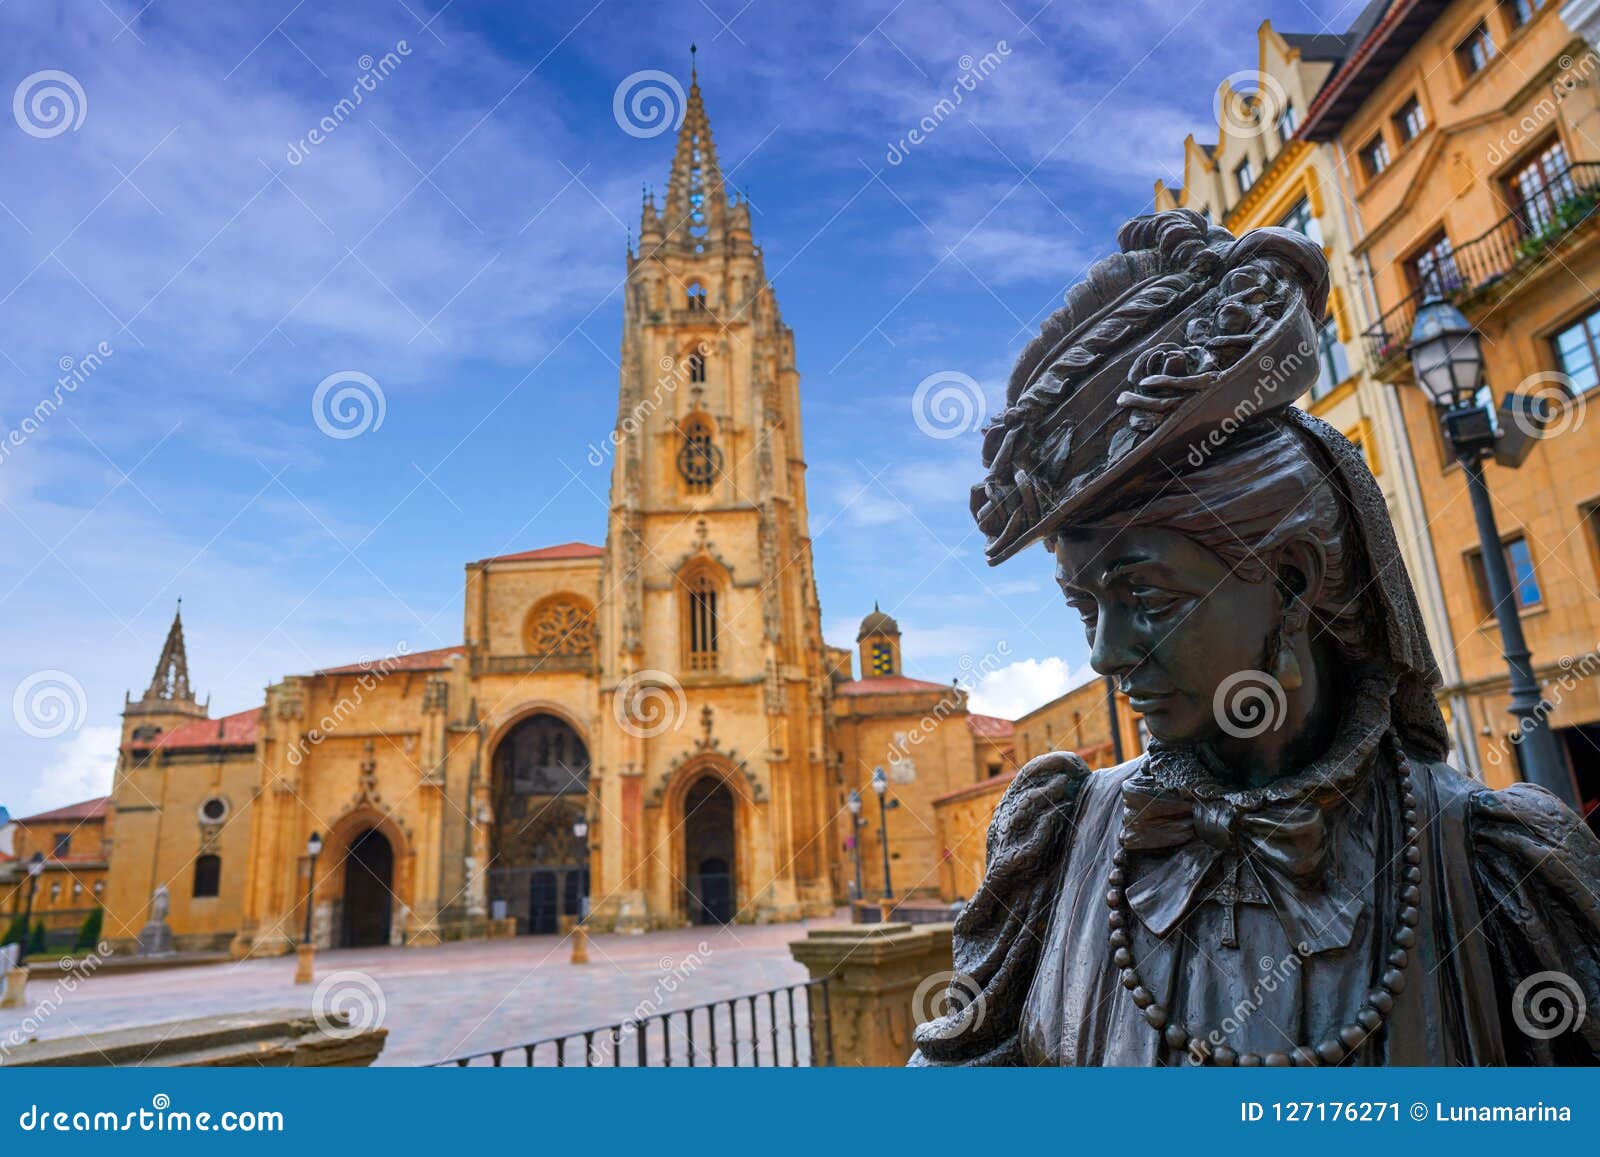 oviedo cathedral and regenta statue in asturias